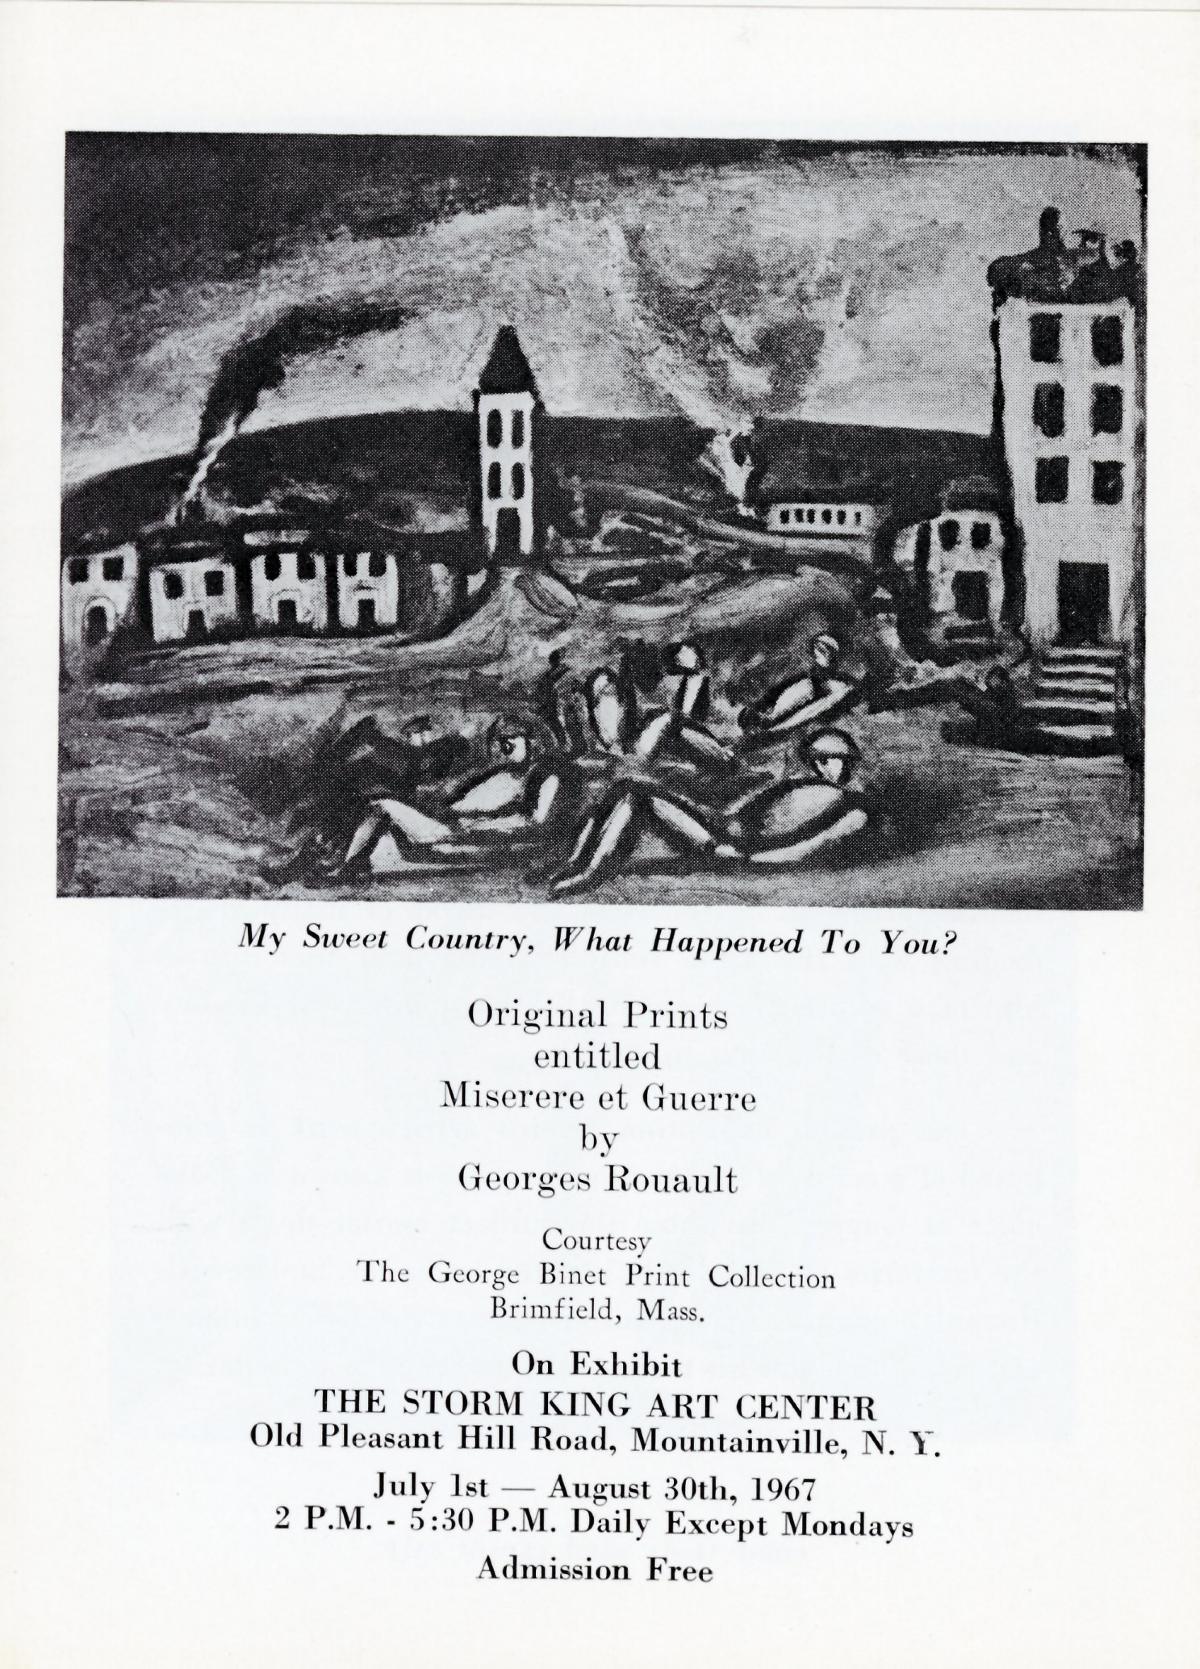 Original Prints entitled “Miserere et Guerre” by George Rouault, July 1 – August 30, 1967, brochure cover